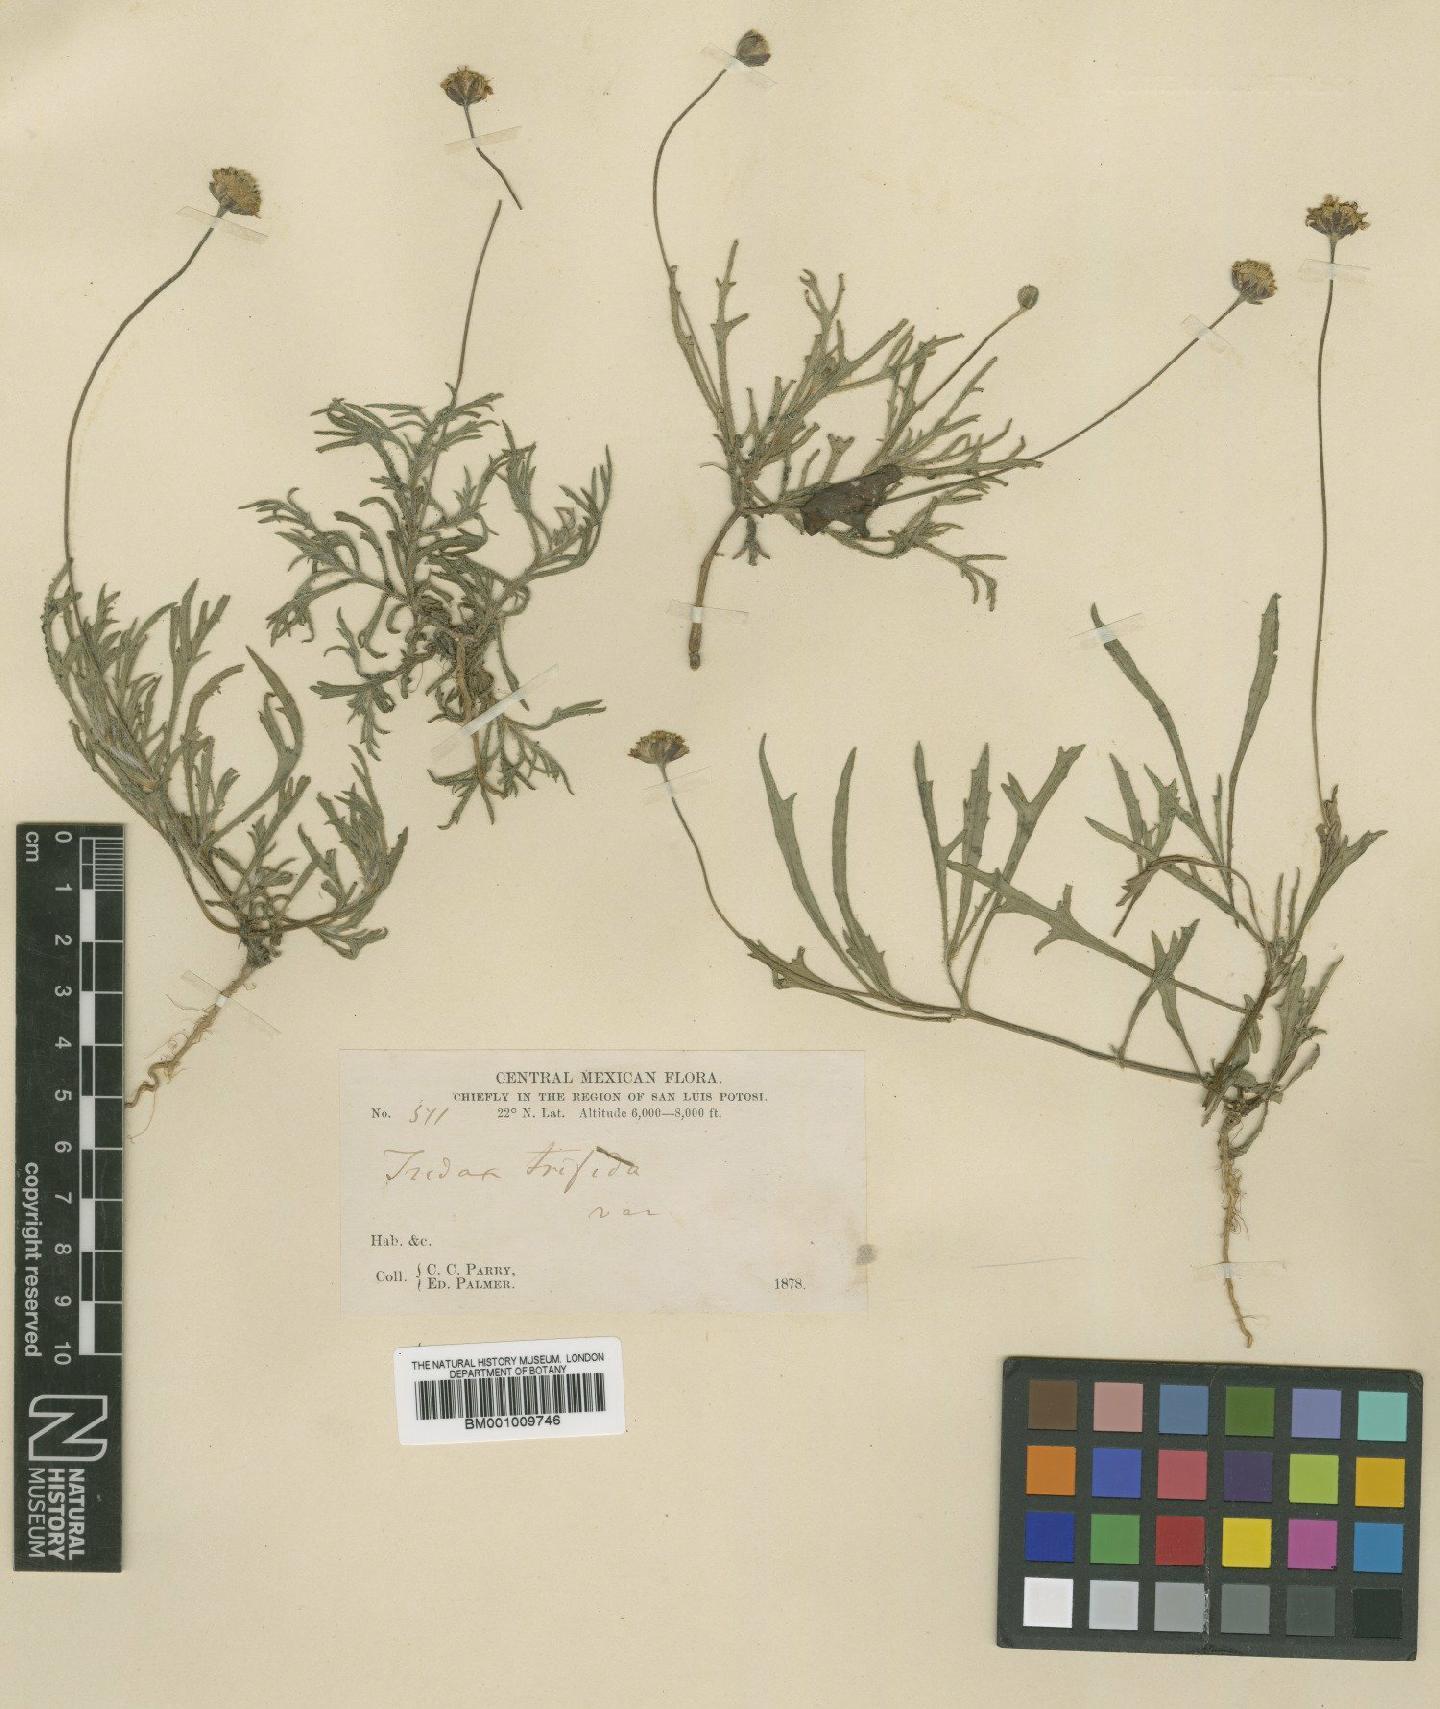 To NHMUK collection (Tridax coronopifolia (Kunth) Hemsl.; NHMUK:ecatalogue:621125)